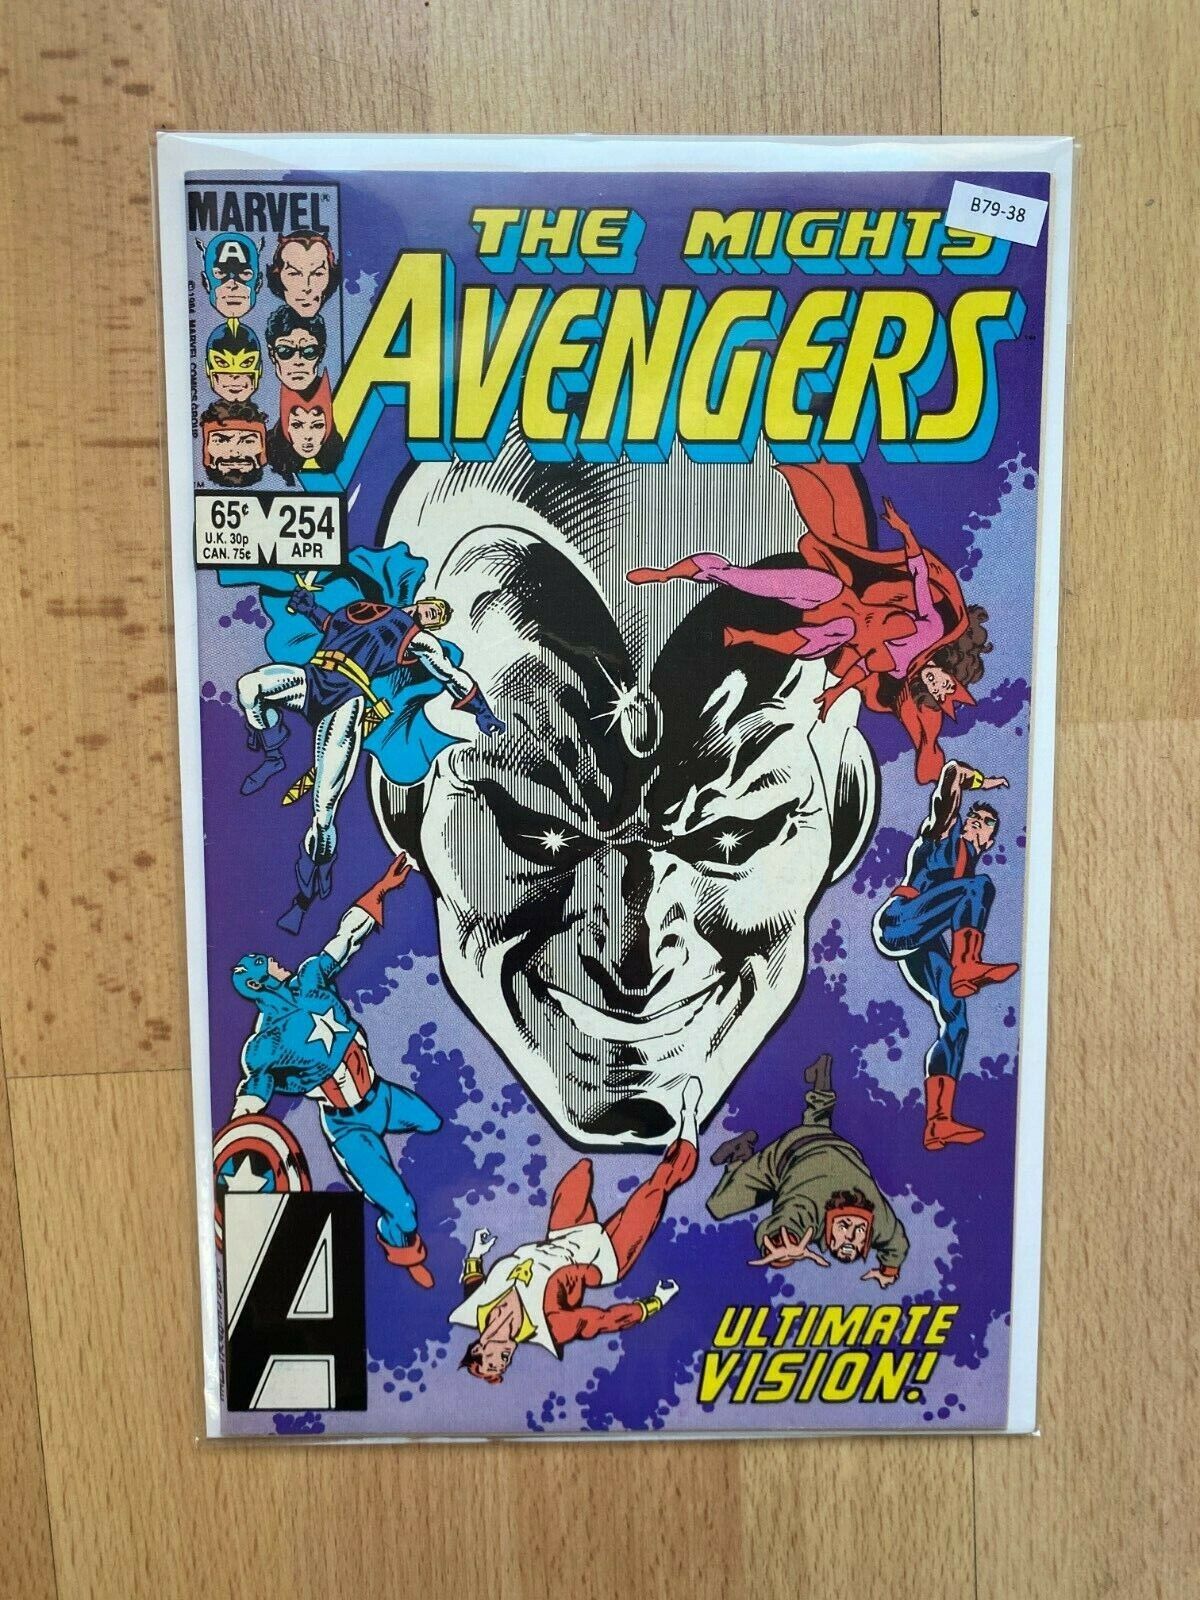 Avengers vol.1 #254 1985 High Grade 9.0 Marvel Comic Book B79-38